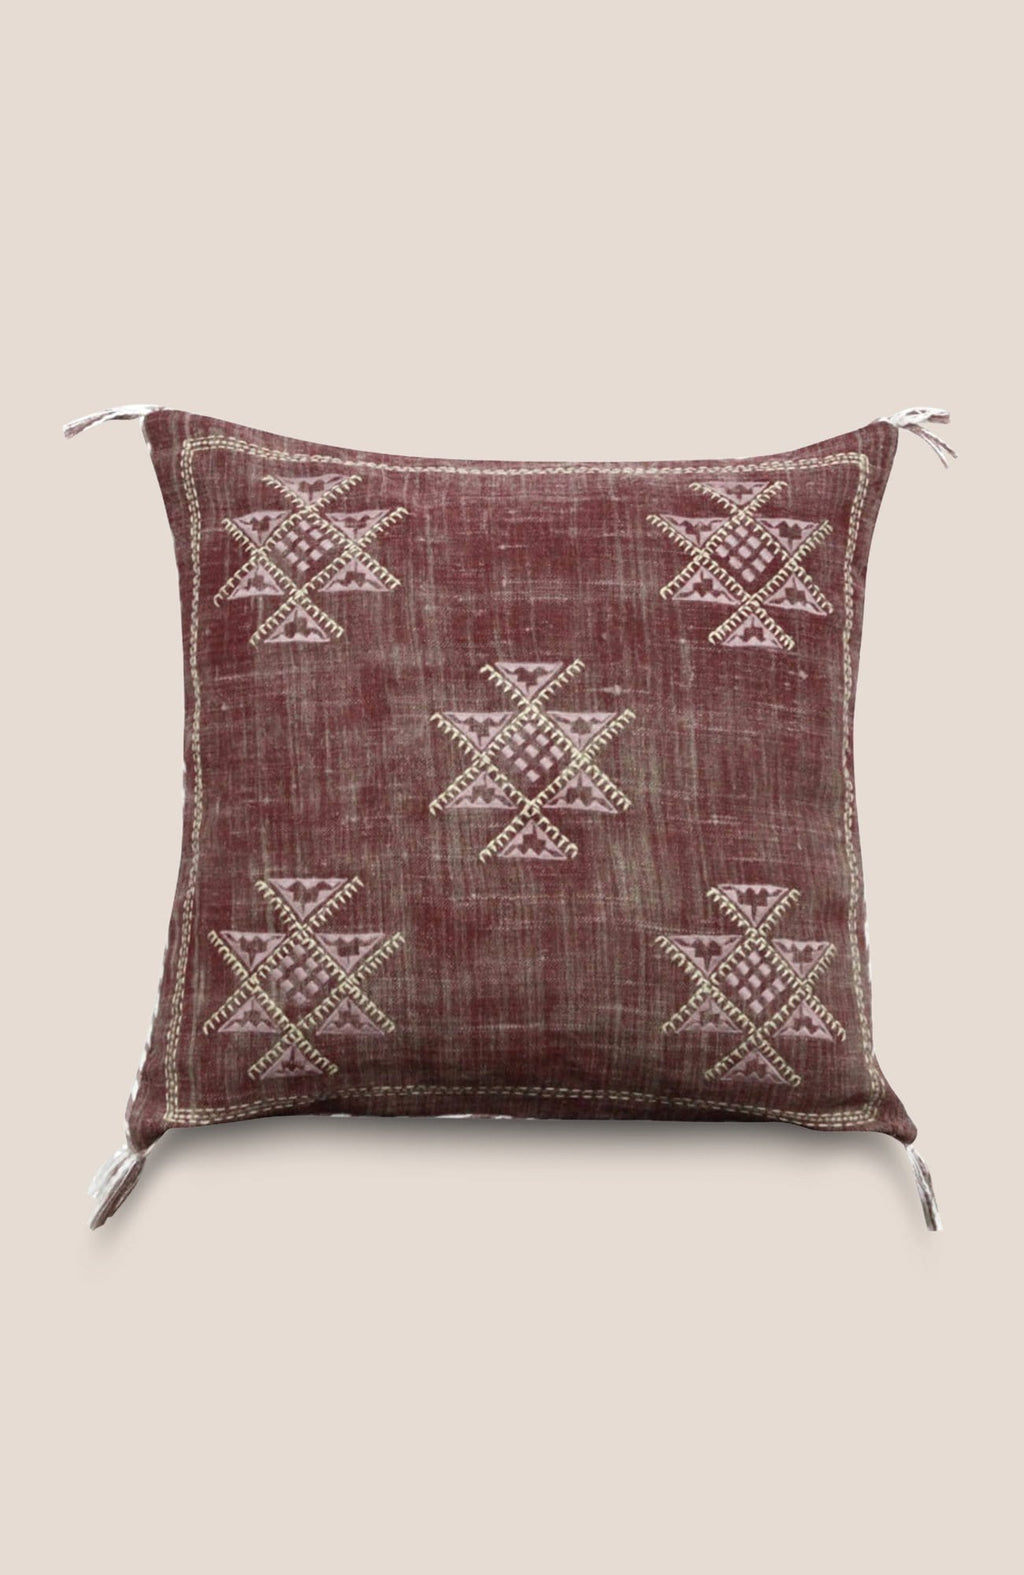 Sabra Pillow Cover Elsa - Home Decor | Shop Baskets, Ceramics, Pillows, Rugs & Wall Hangs online